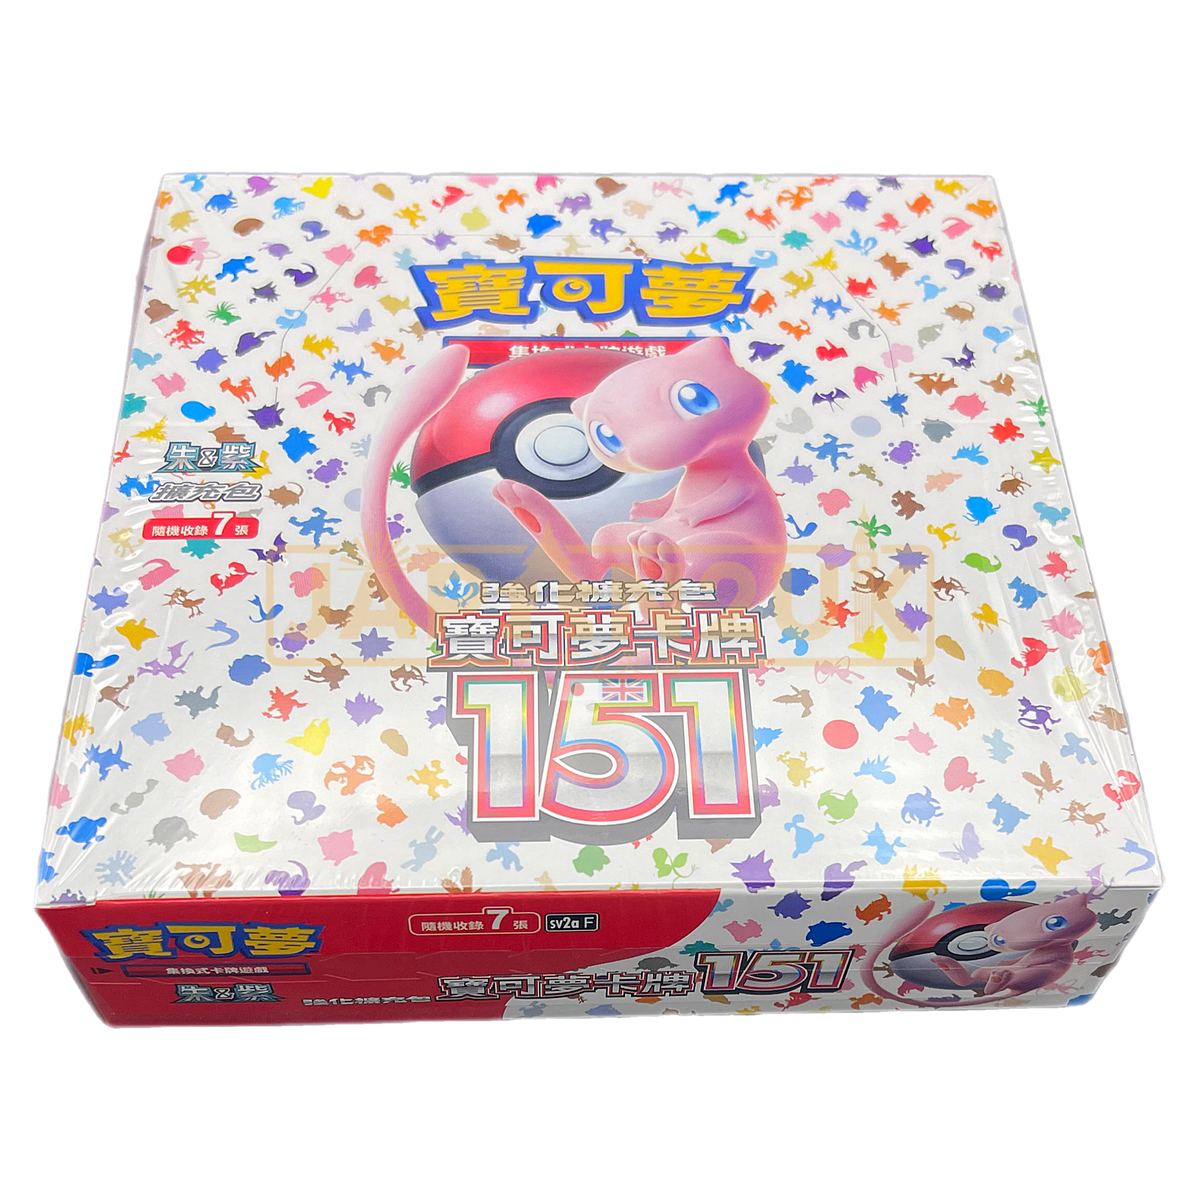 Pokemon 151 English Single Booster Pack